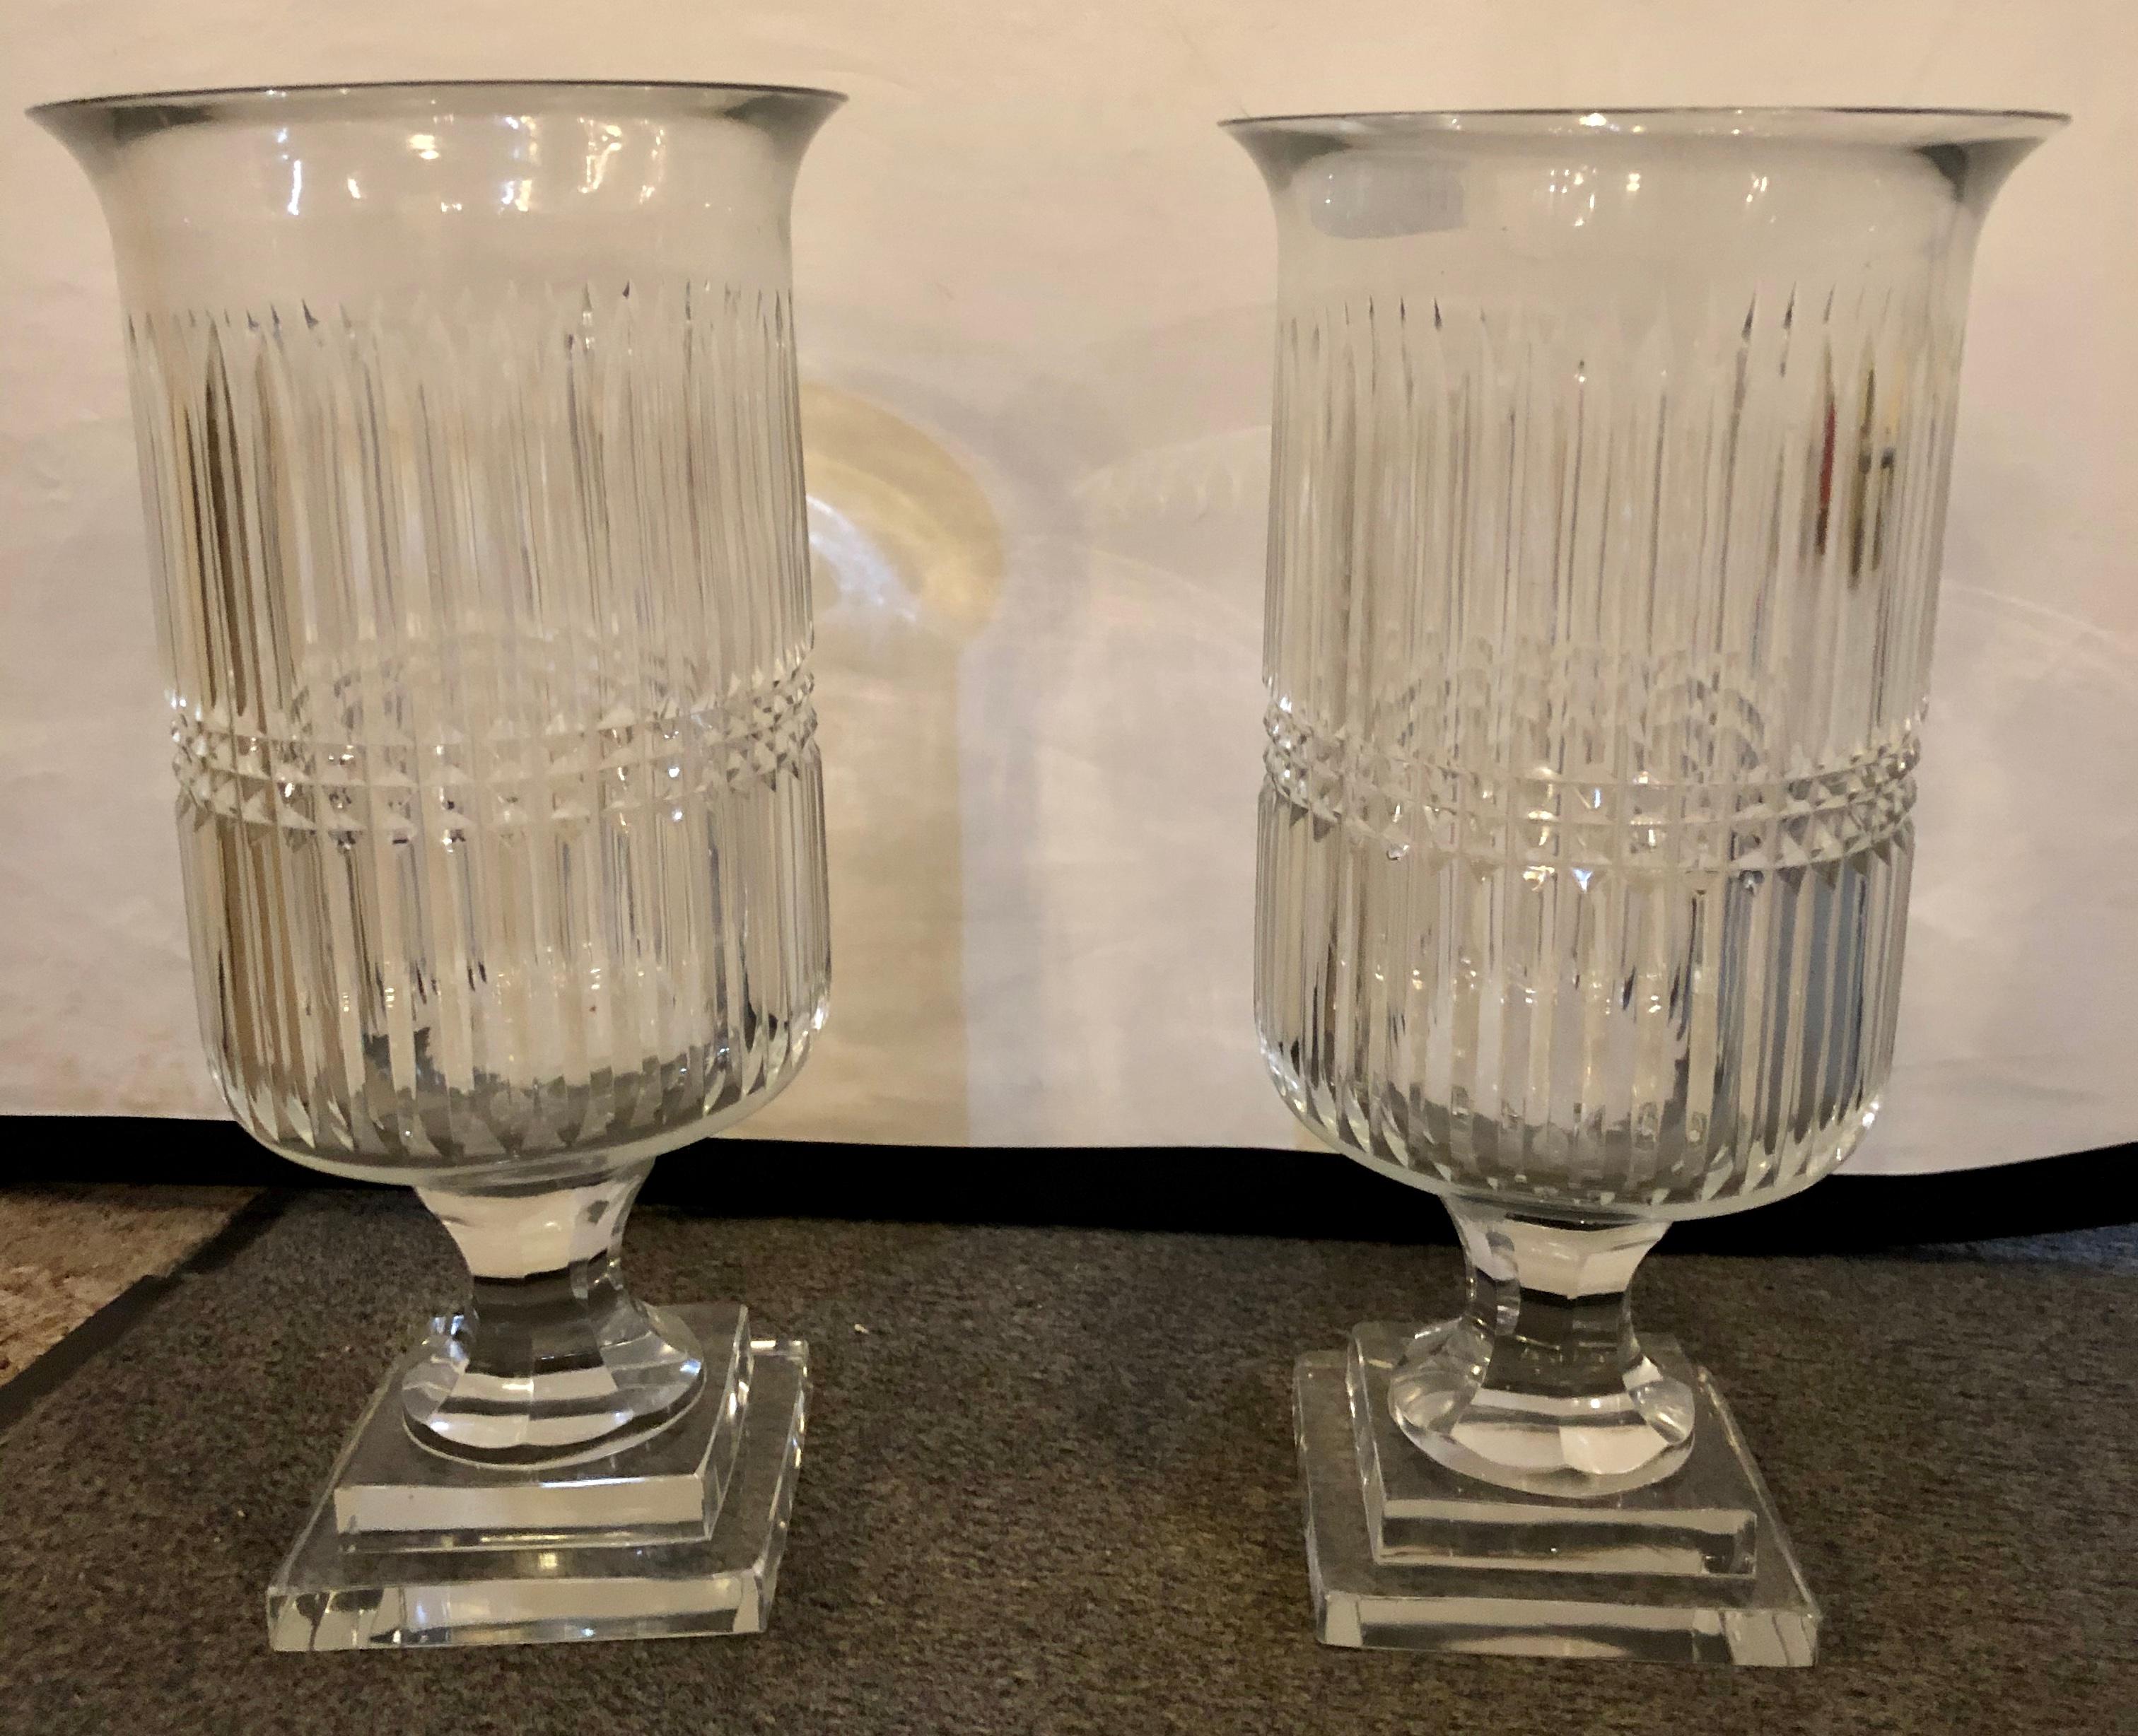 Pair of linear crystal hurricane jars
X.